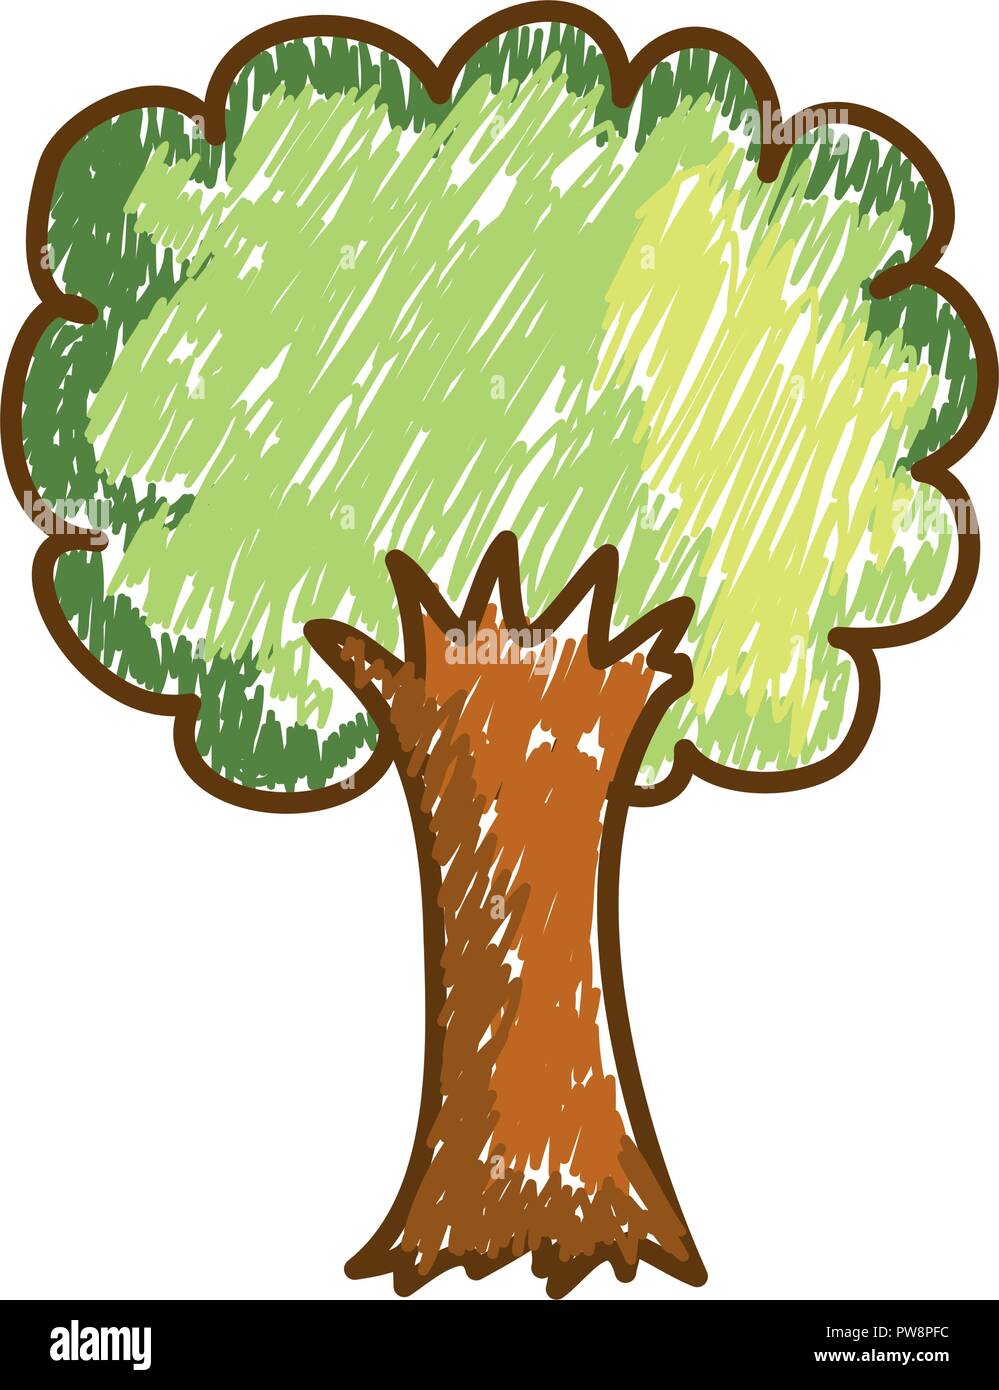 Cute Baum Zeichnen Symbol Vektor Illustration Design Stock Vektorgrafik Alamy